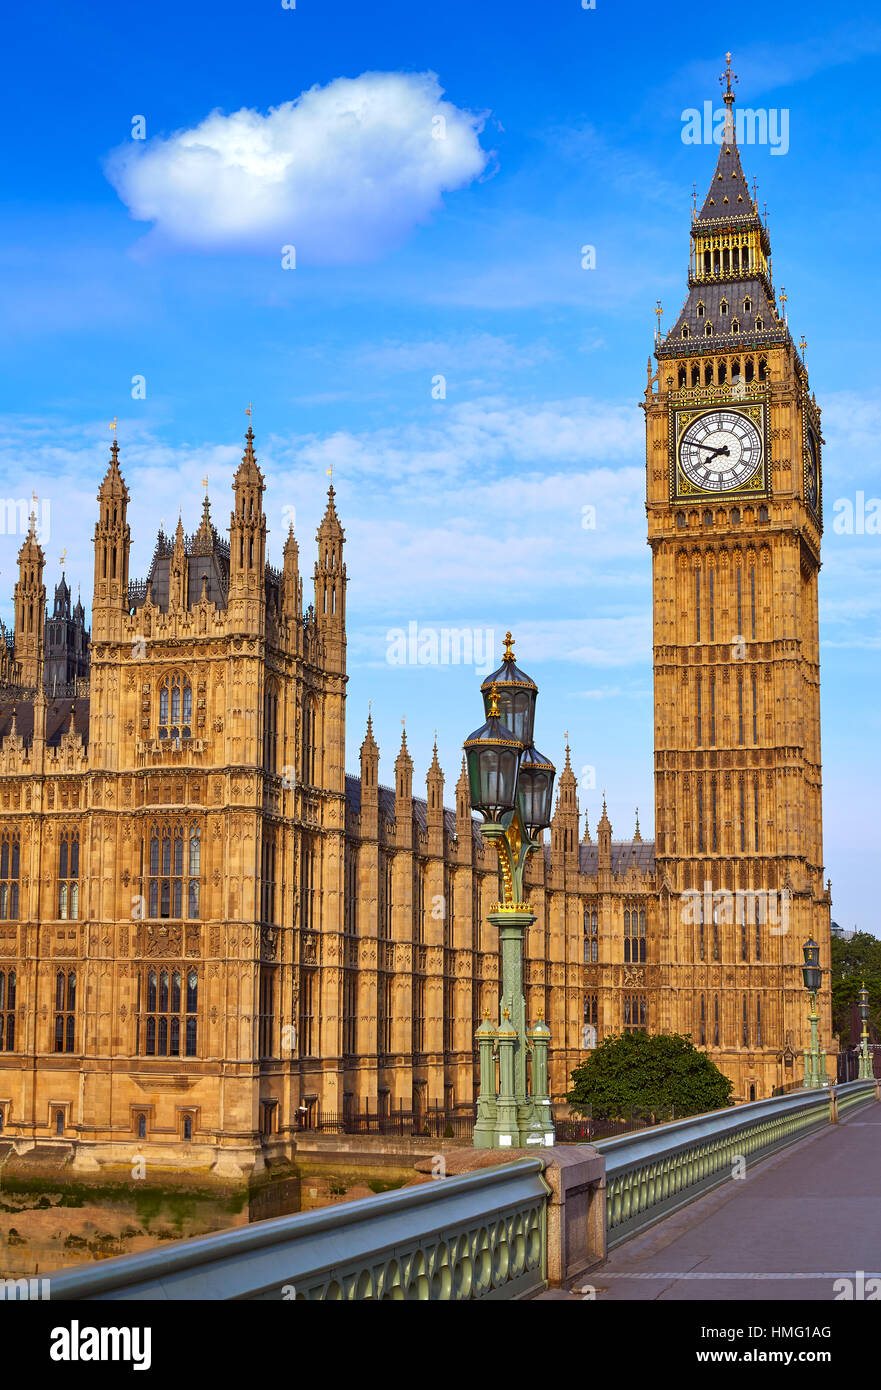 Big Ben Clock Tower in London at England Stock Photo